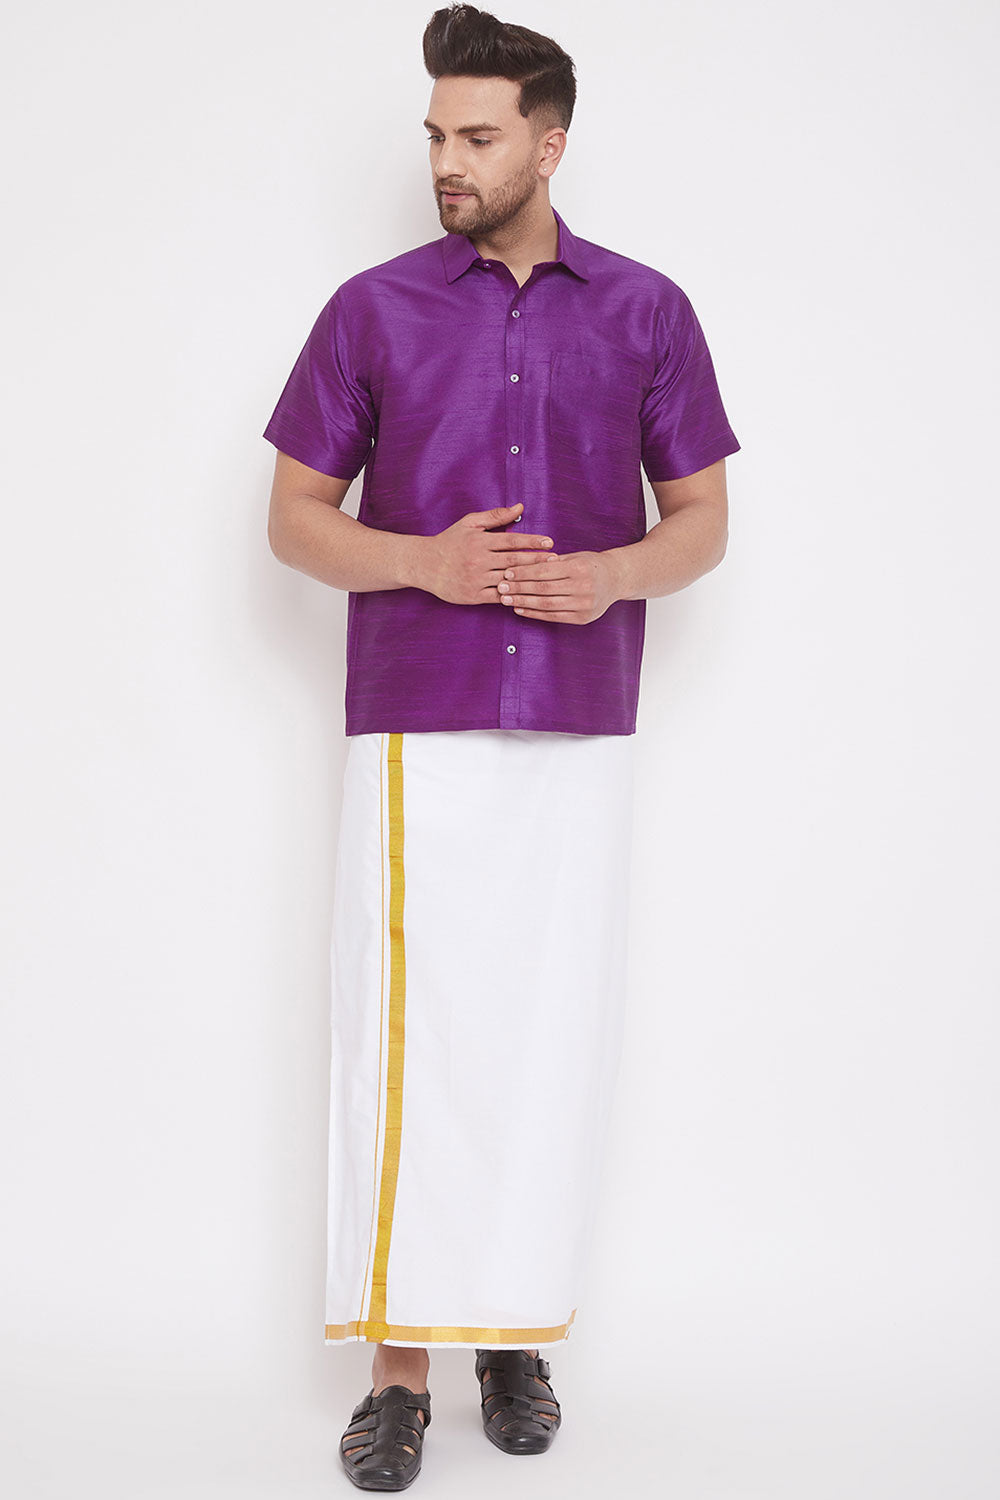 Purple Art Silk Shirt and Mundu for Men's